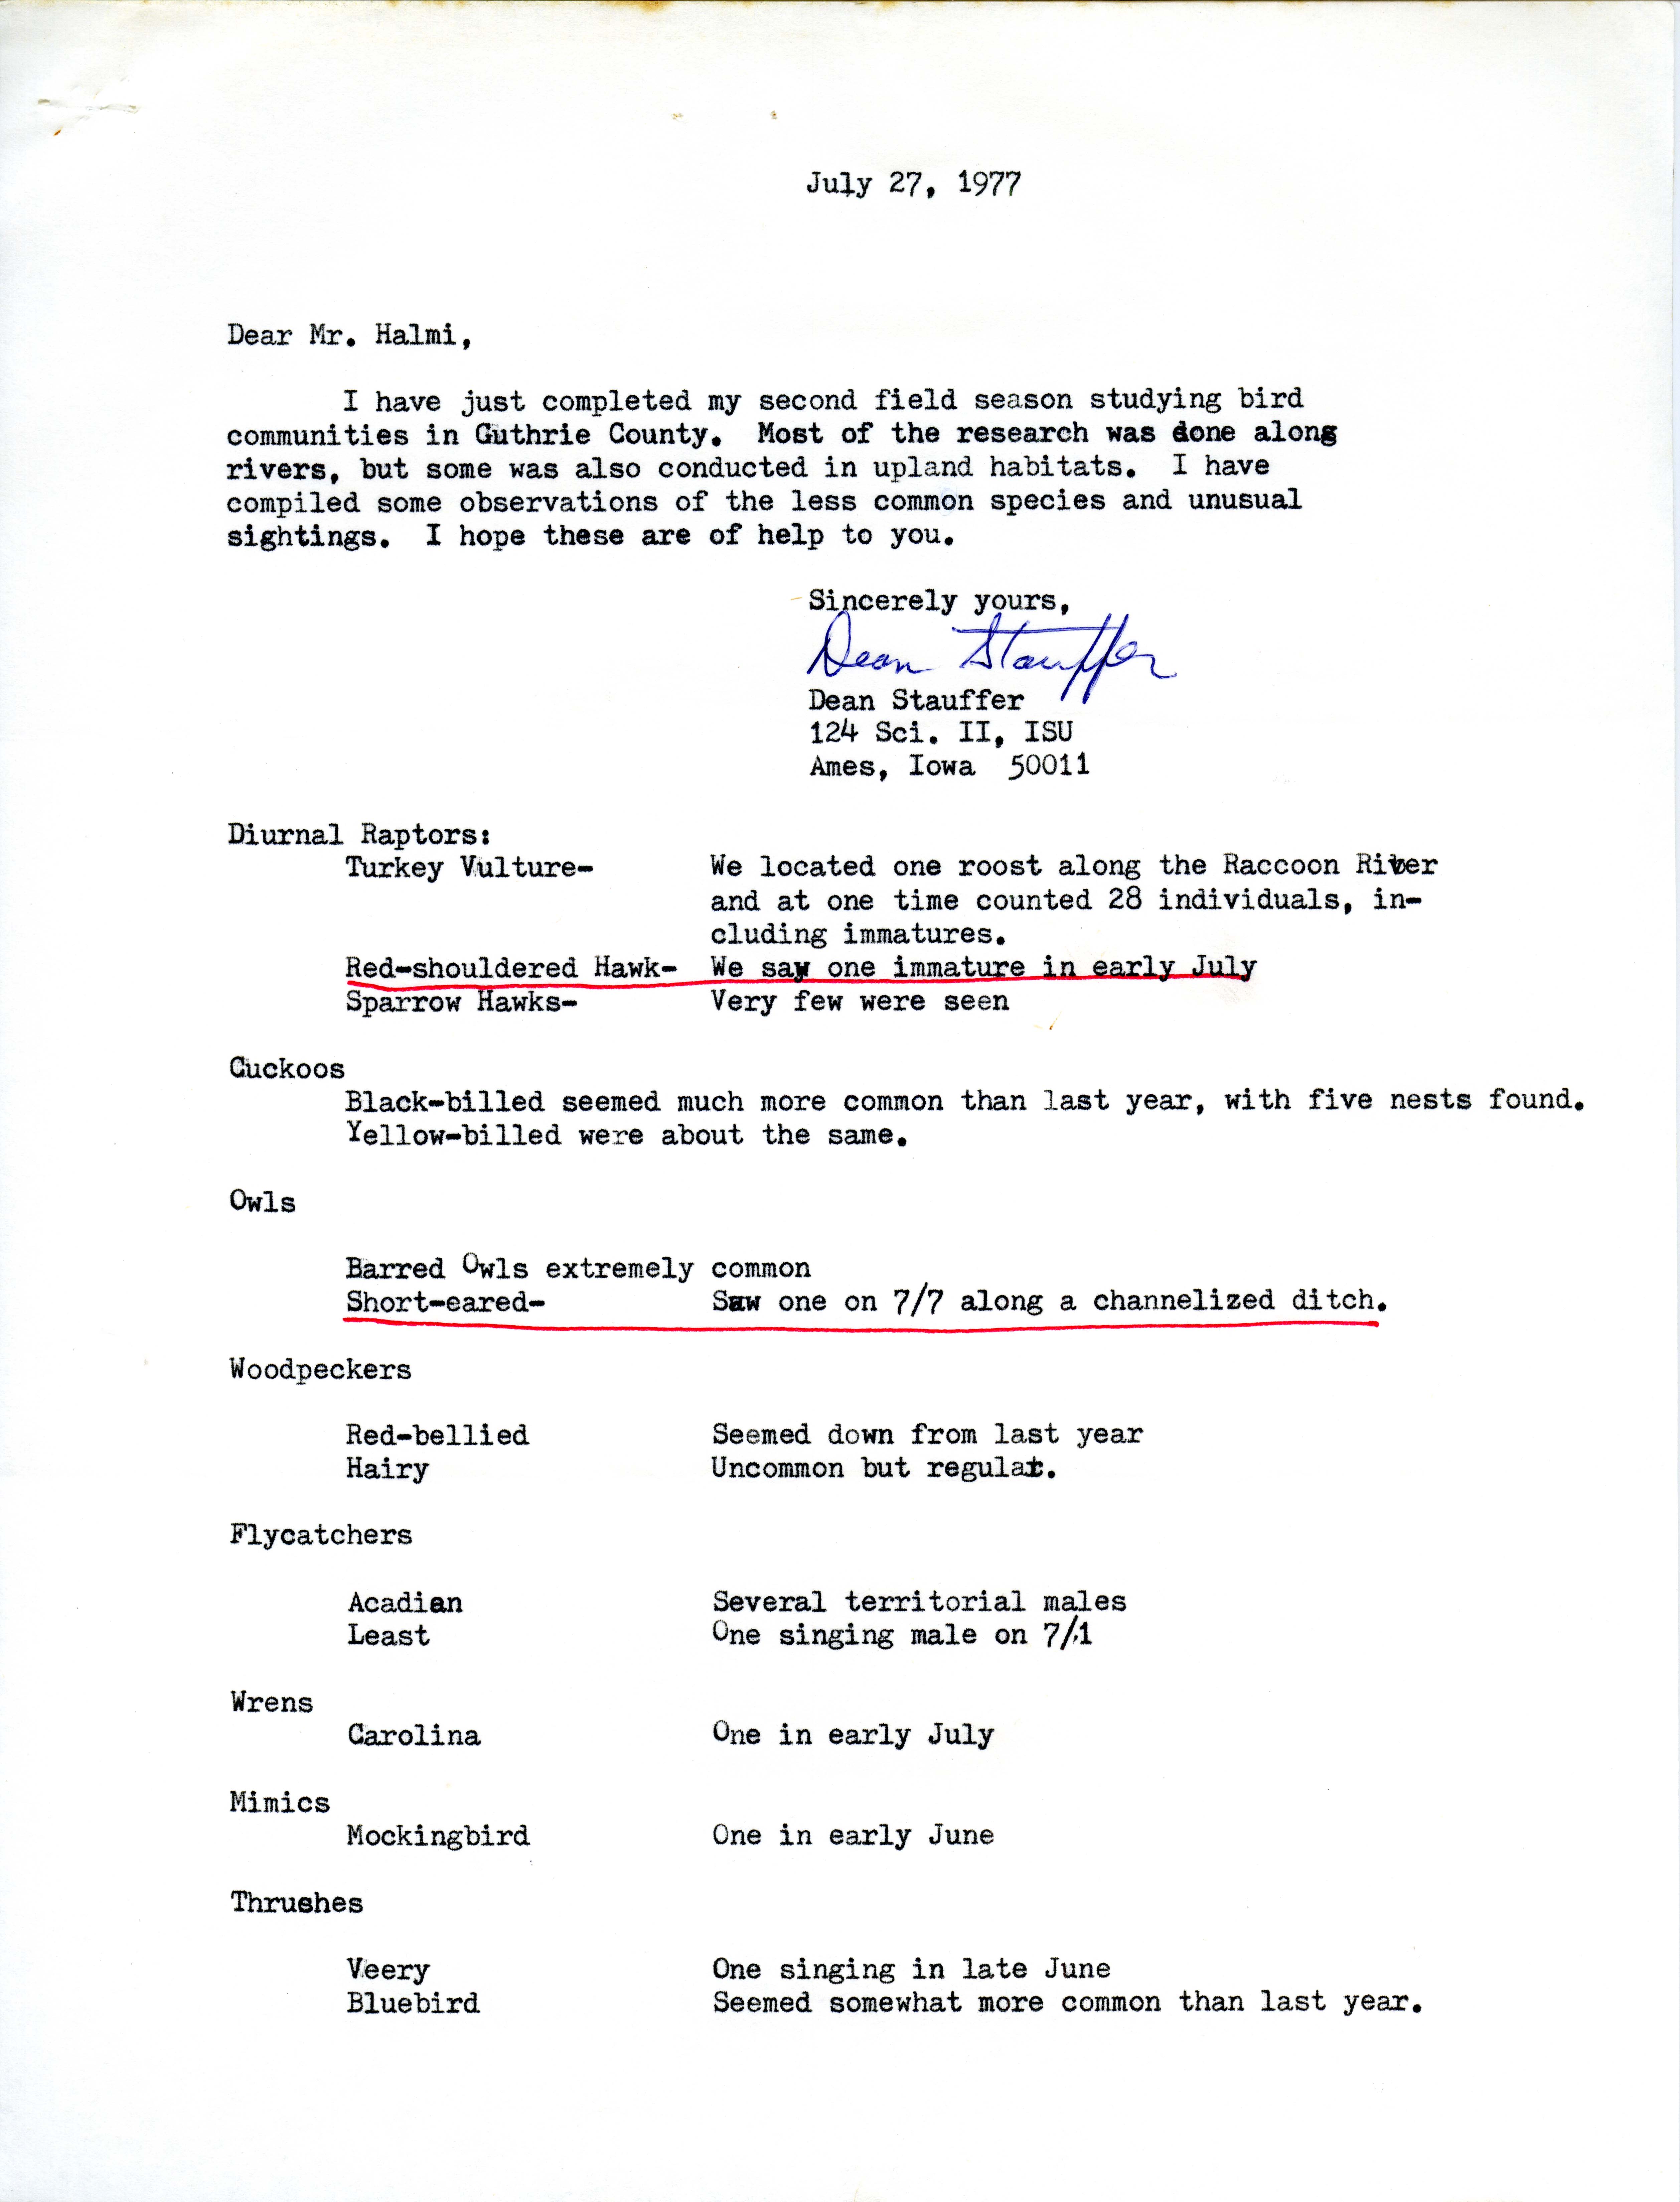 Dean F. Stauffer letter to Nicholas S. Halmi regarding bird sightings, July 27, 1977